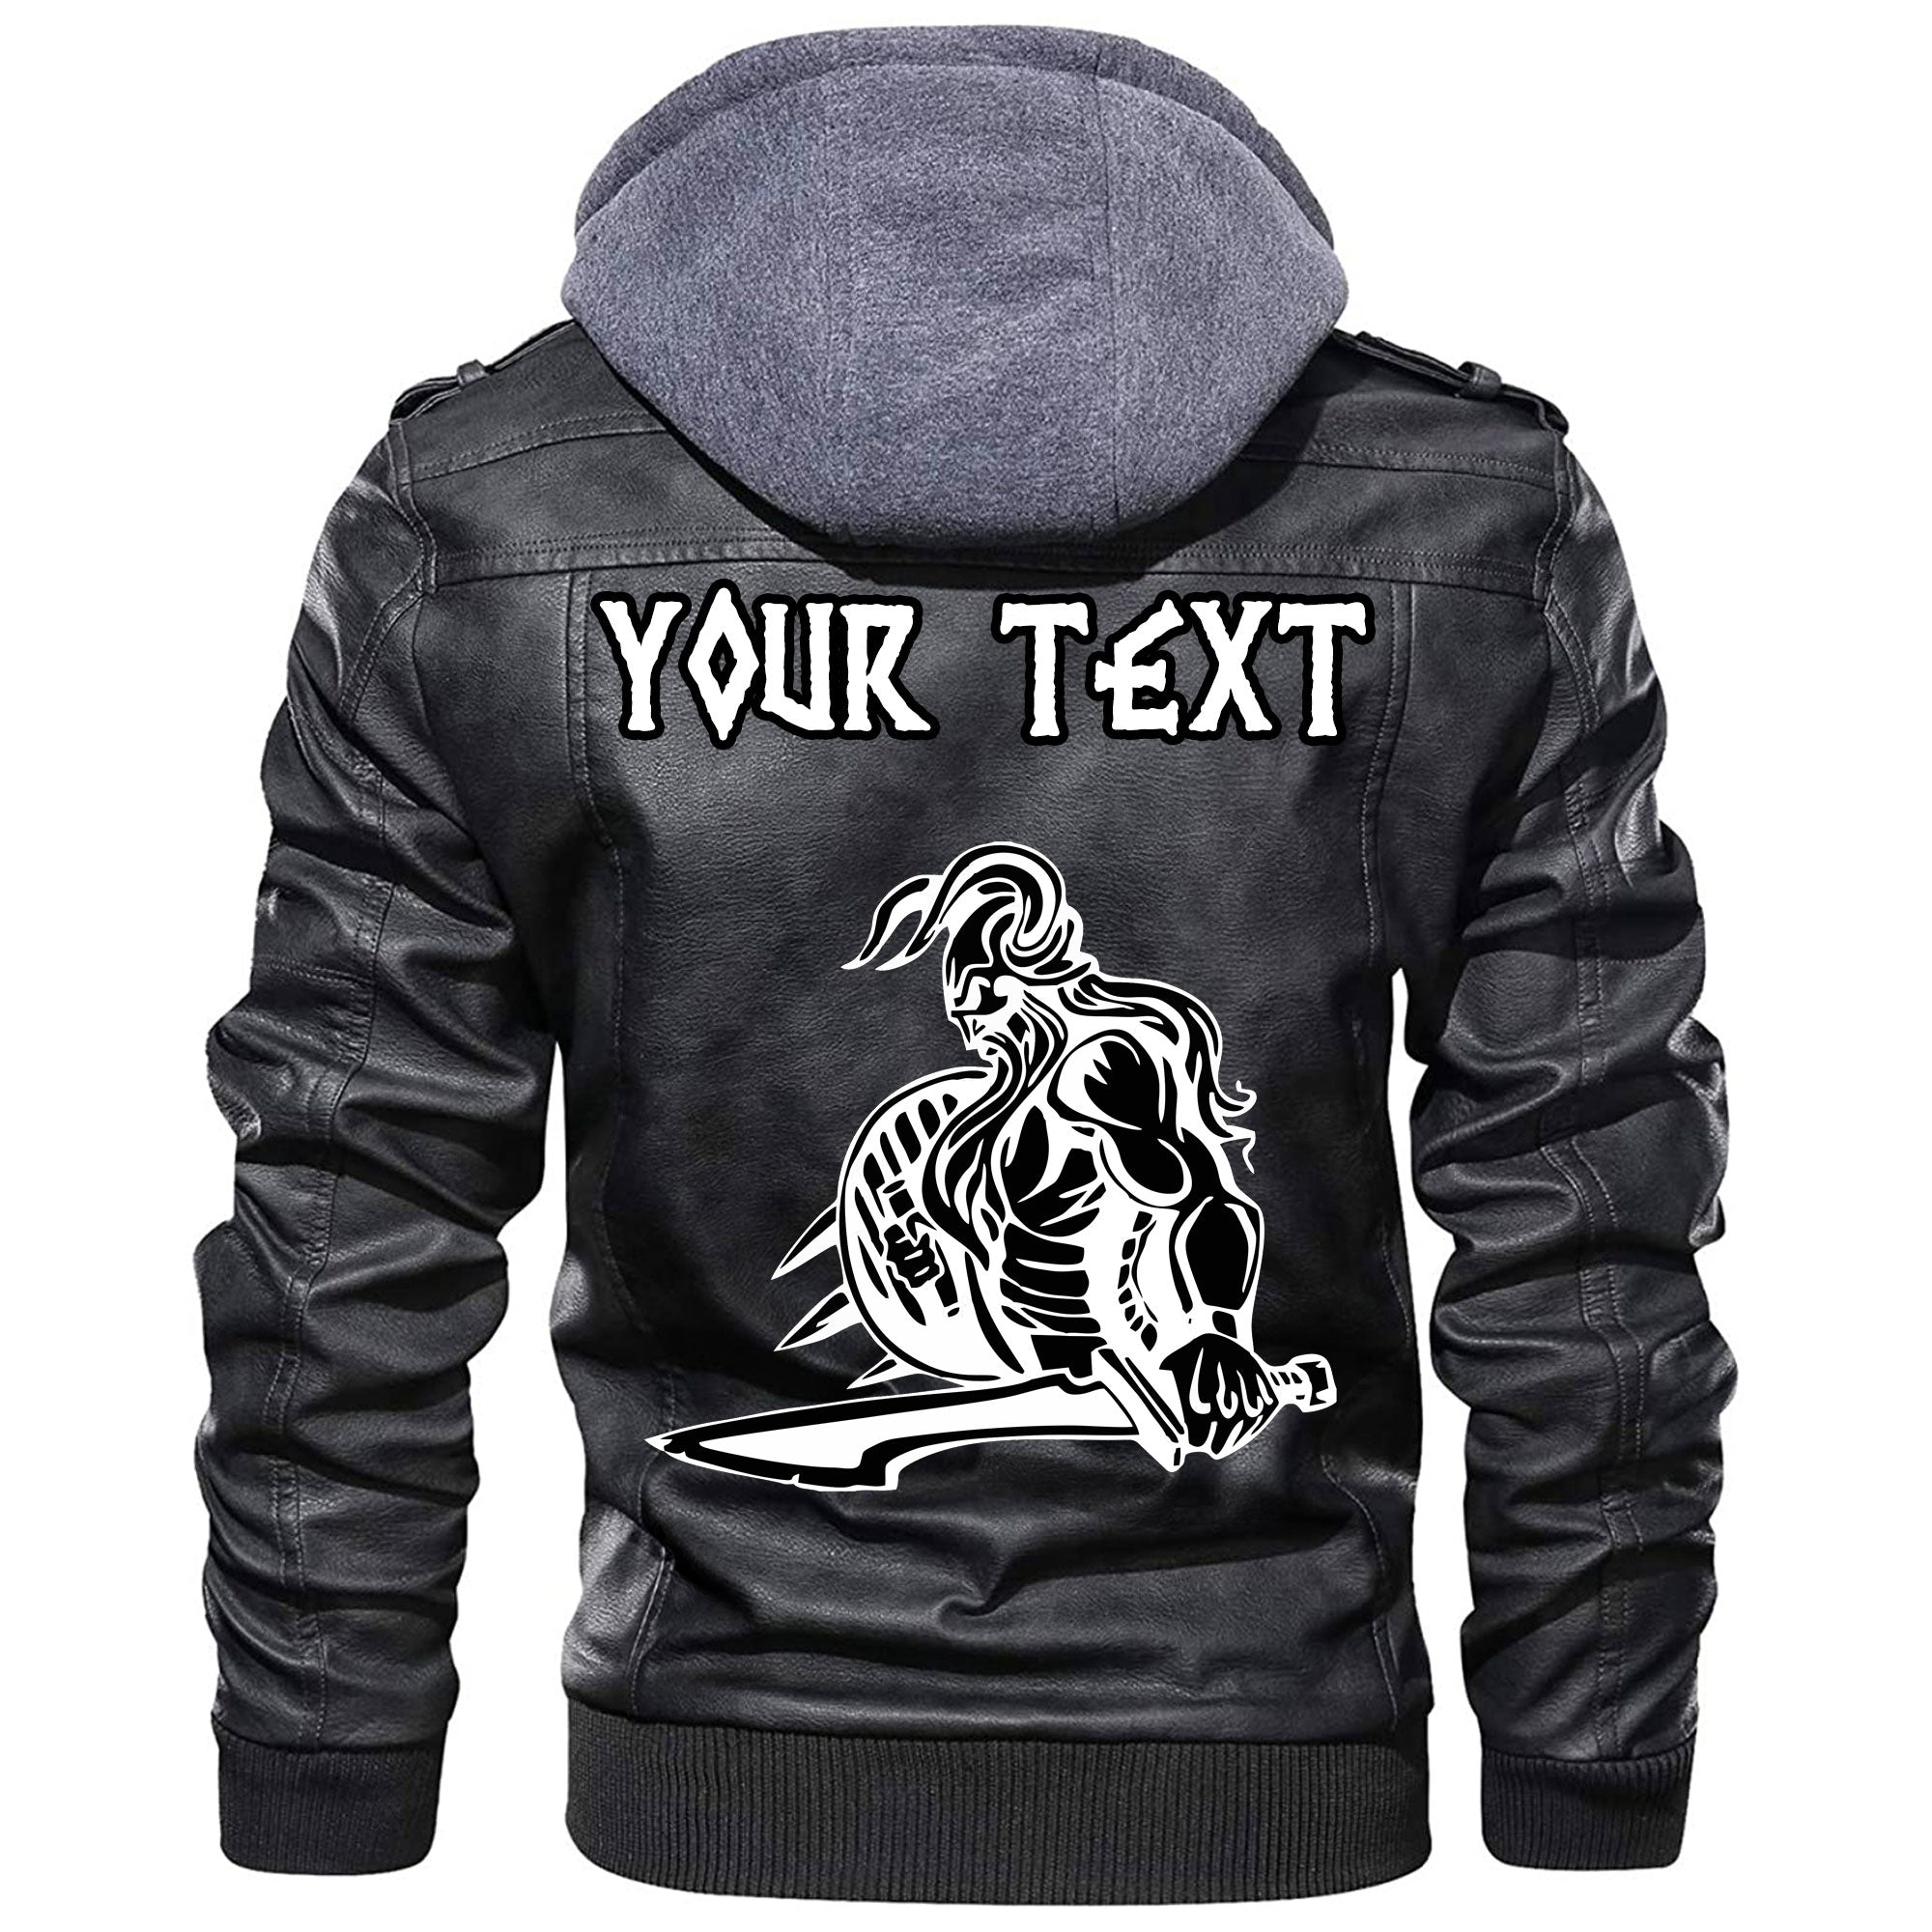 custom-wonder-print-shop-warrior-battle-car-truck-window-sticker-icon-leather-jacket